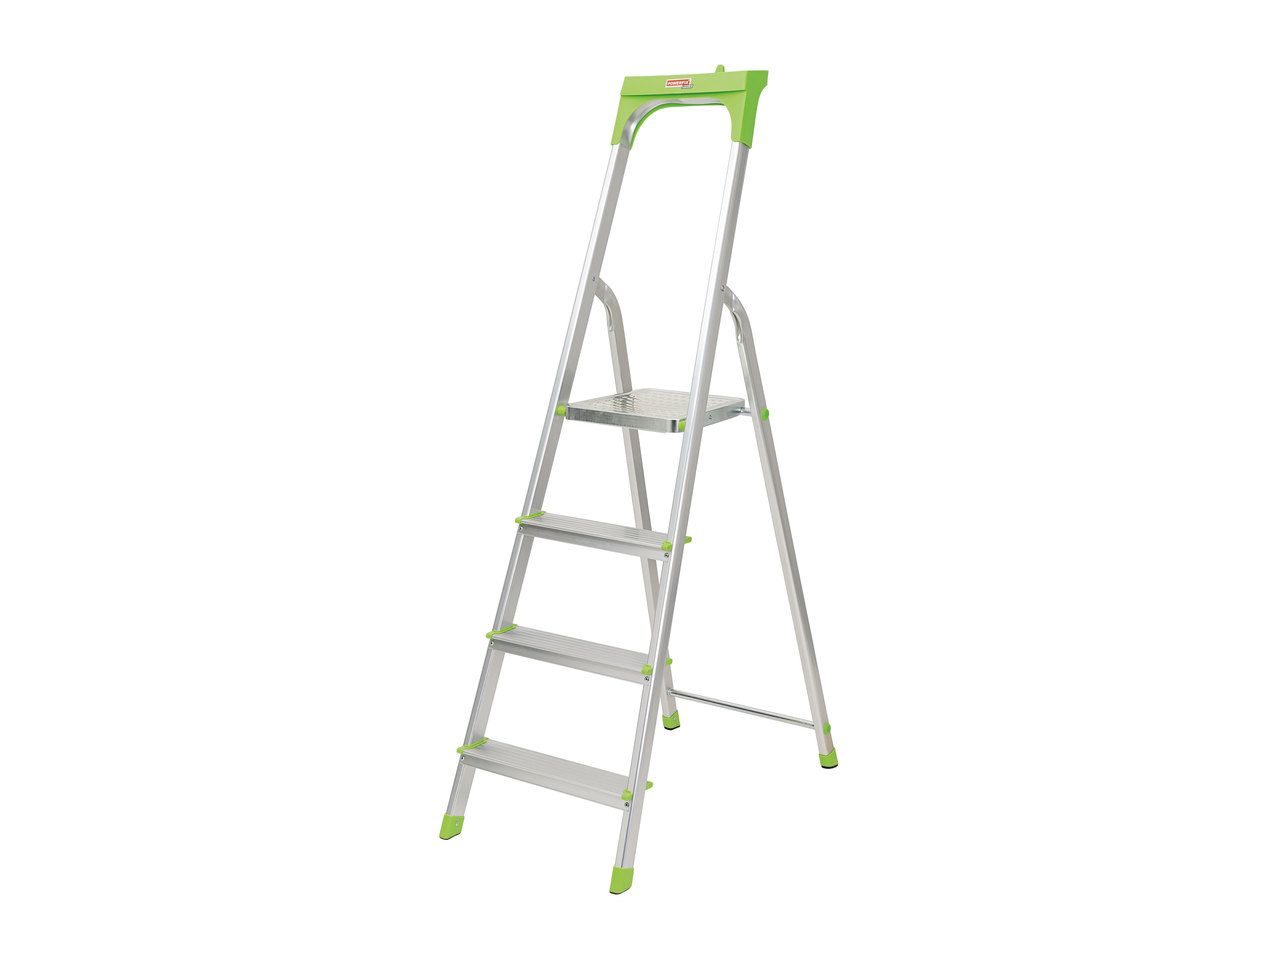 Powerfix Profi Aluminium Household Step Ladder1